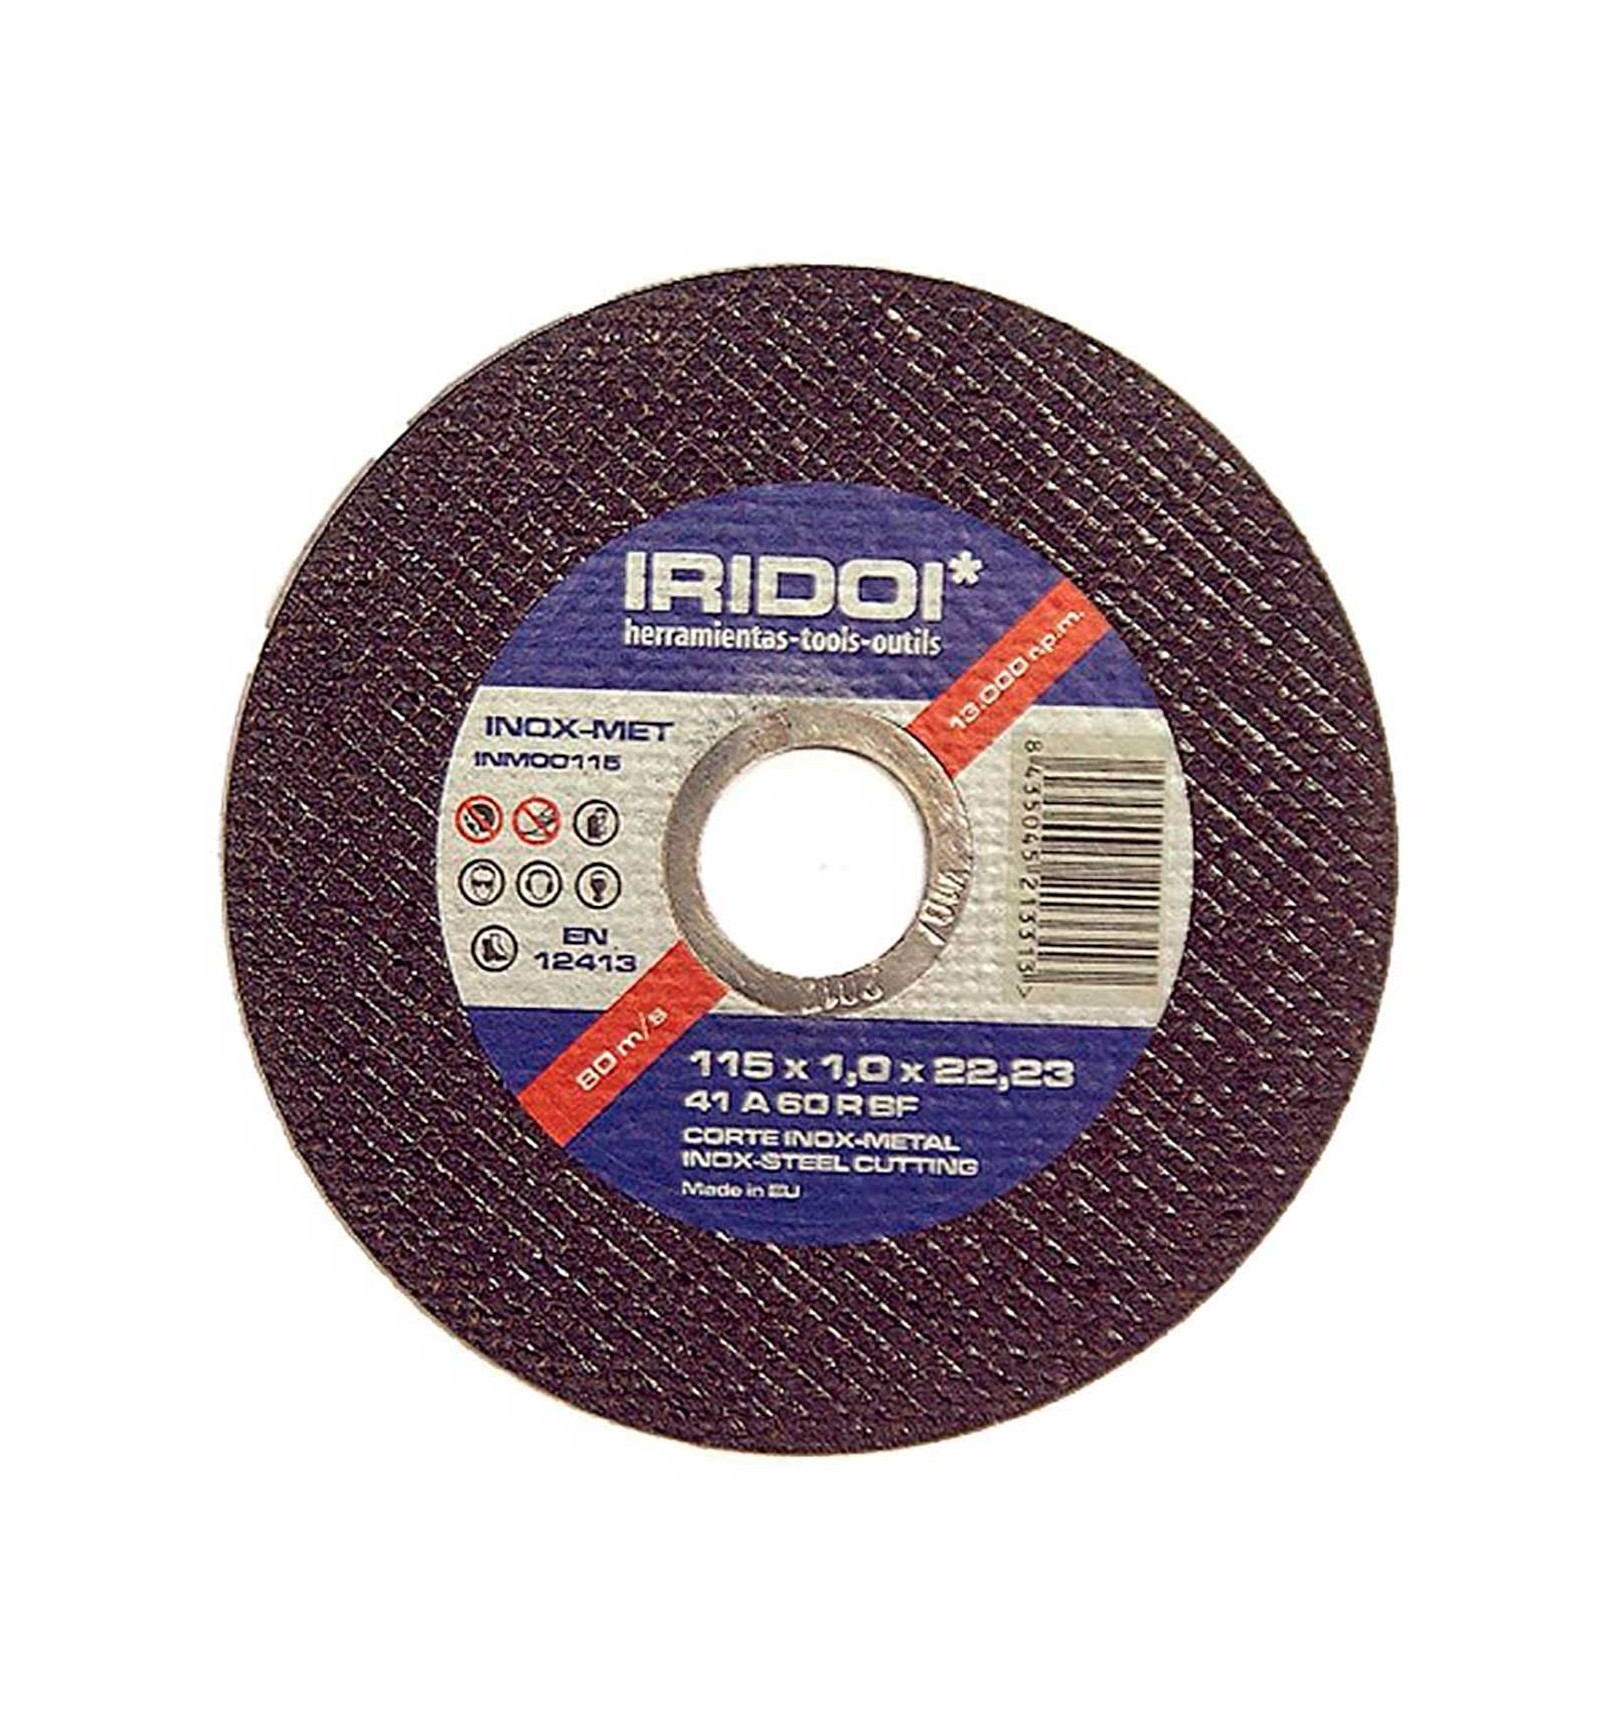 Disco corte metalIXST estandar superfino Ø115x1mm (Paq. 10 UDS)-Iridoi